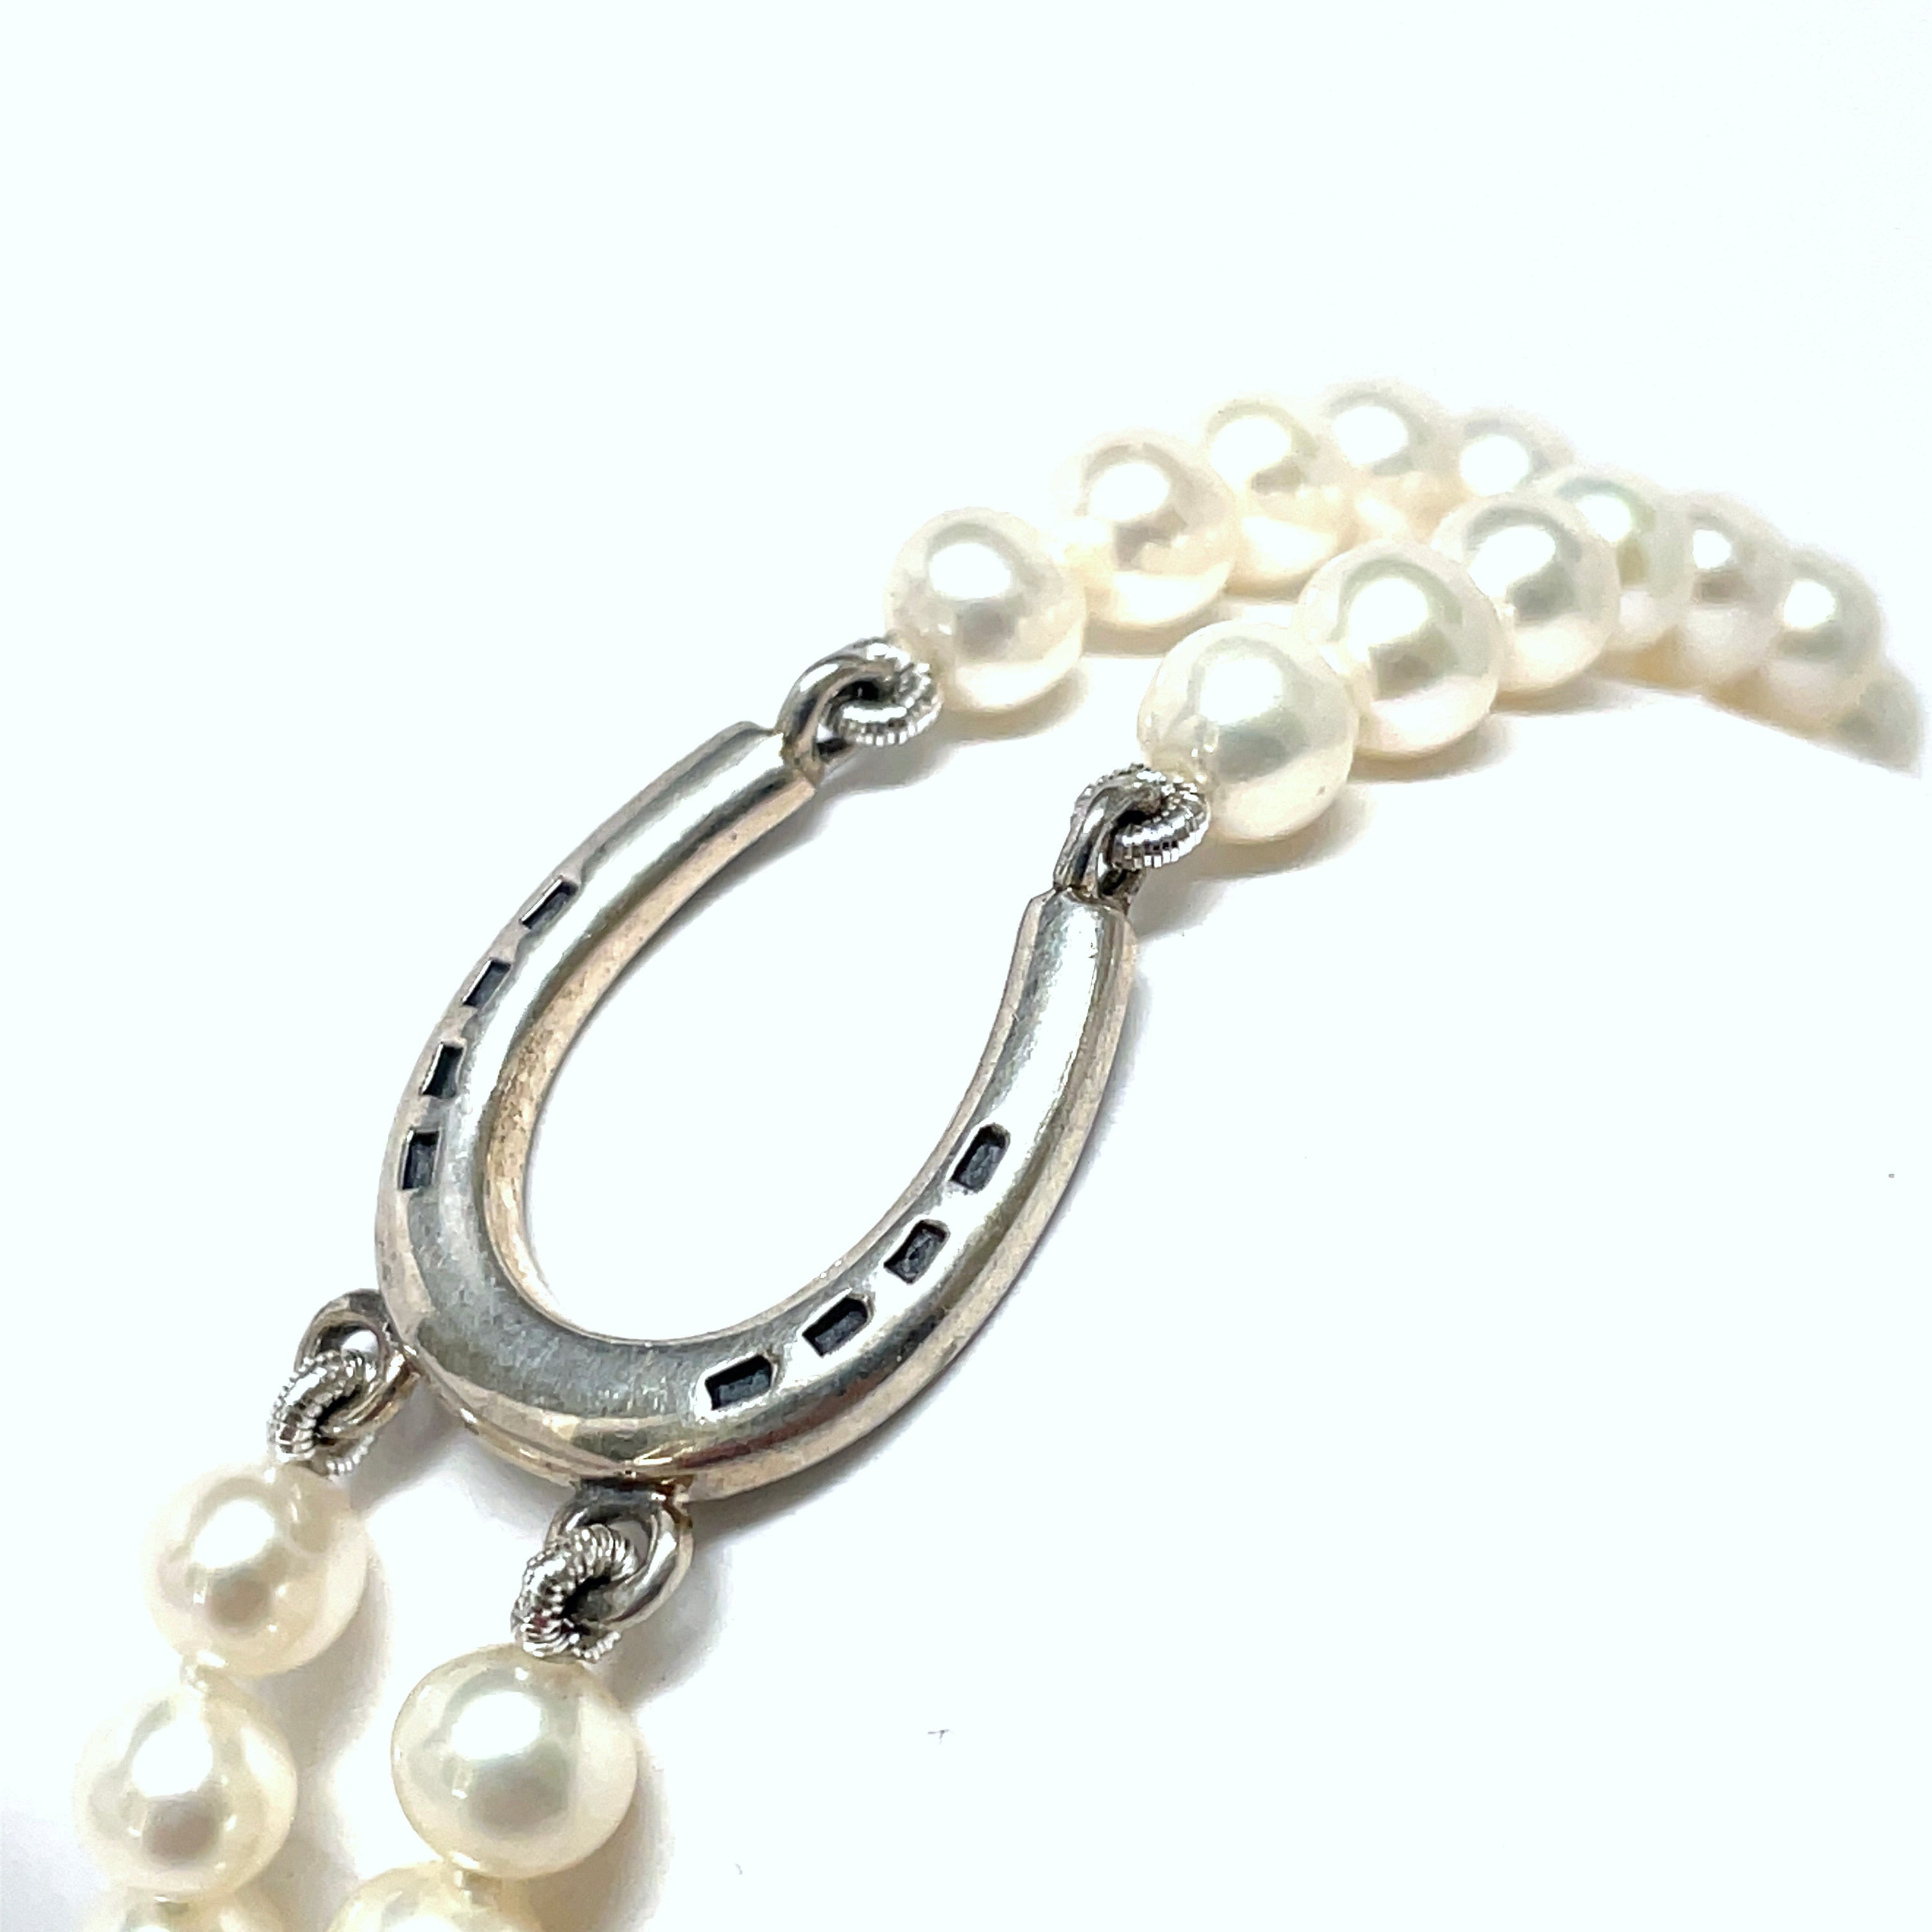 Beautiful pearl and horseshoe bracelet